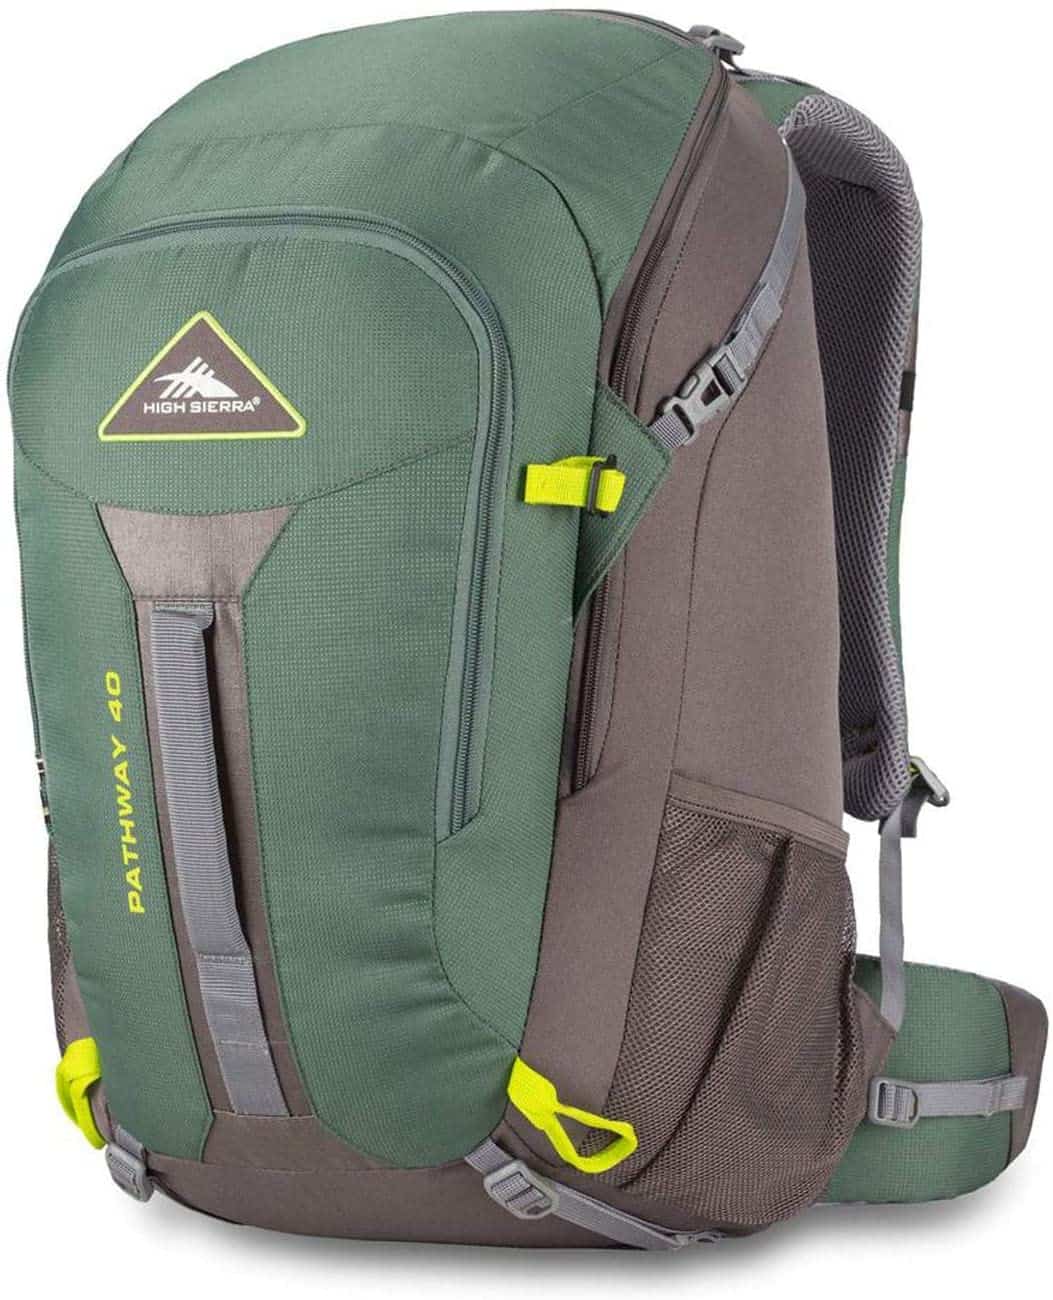 High Sierra Pathway Internal Frame Hiking Backpack ONLY $36.49 (Reg $73)